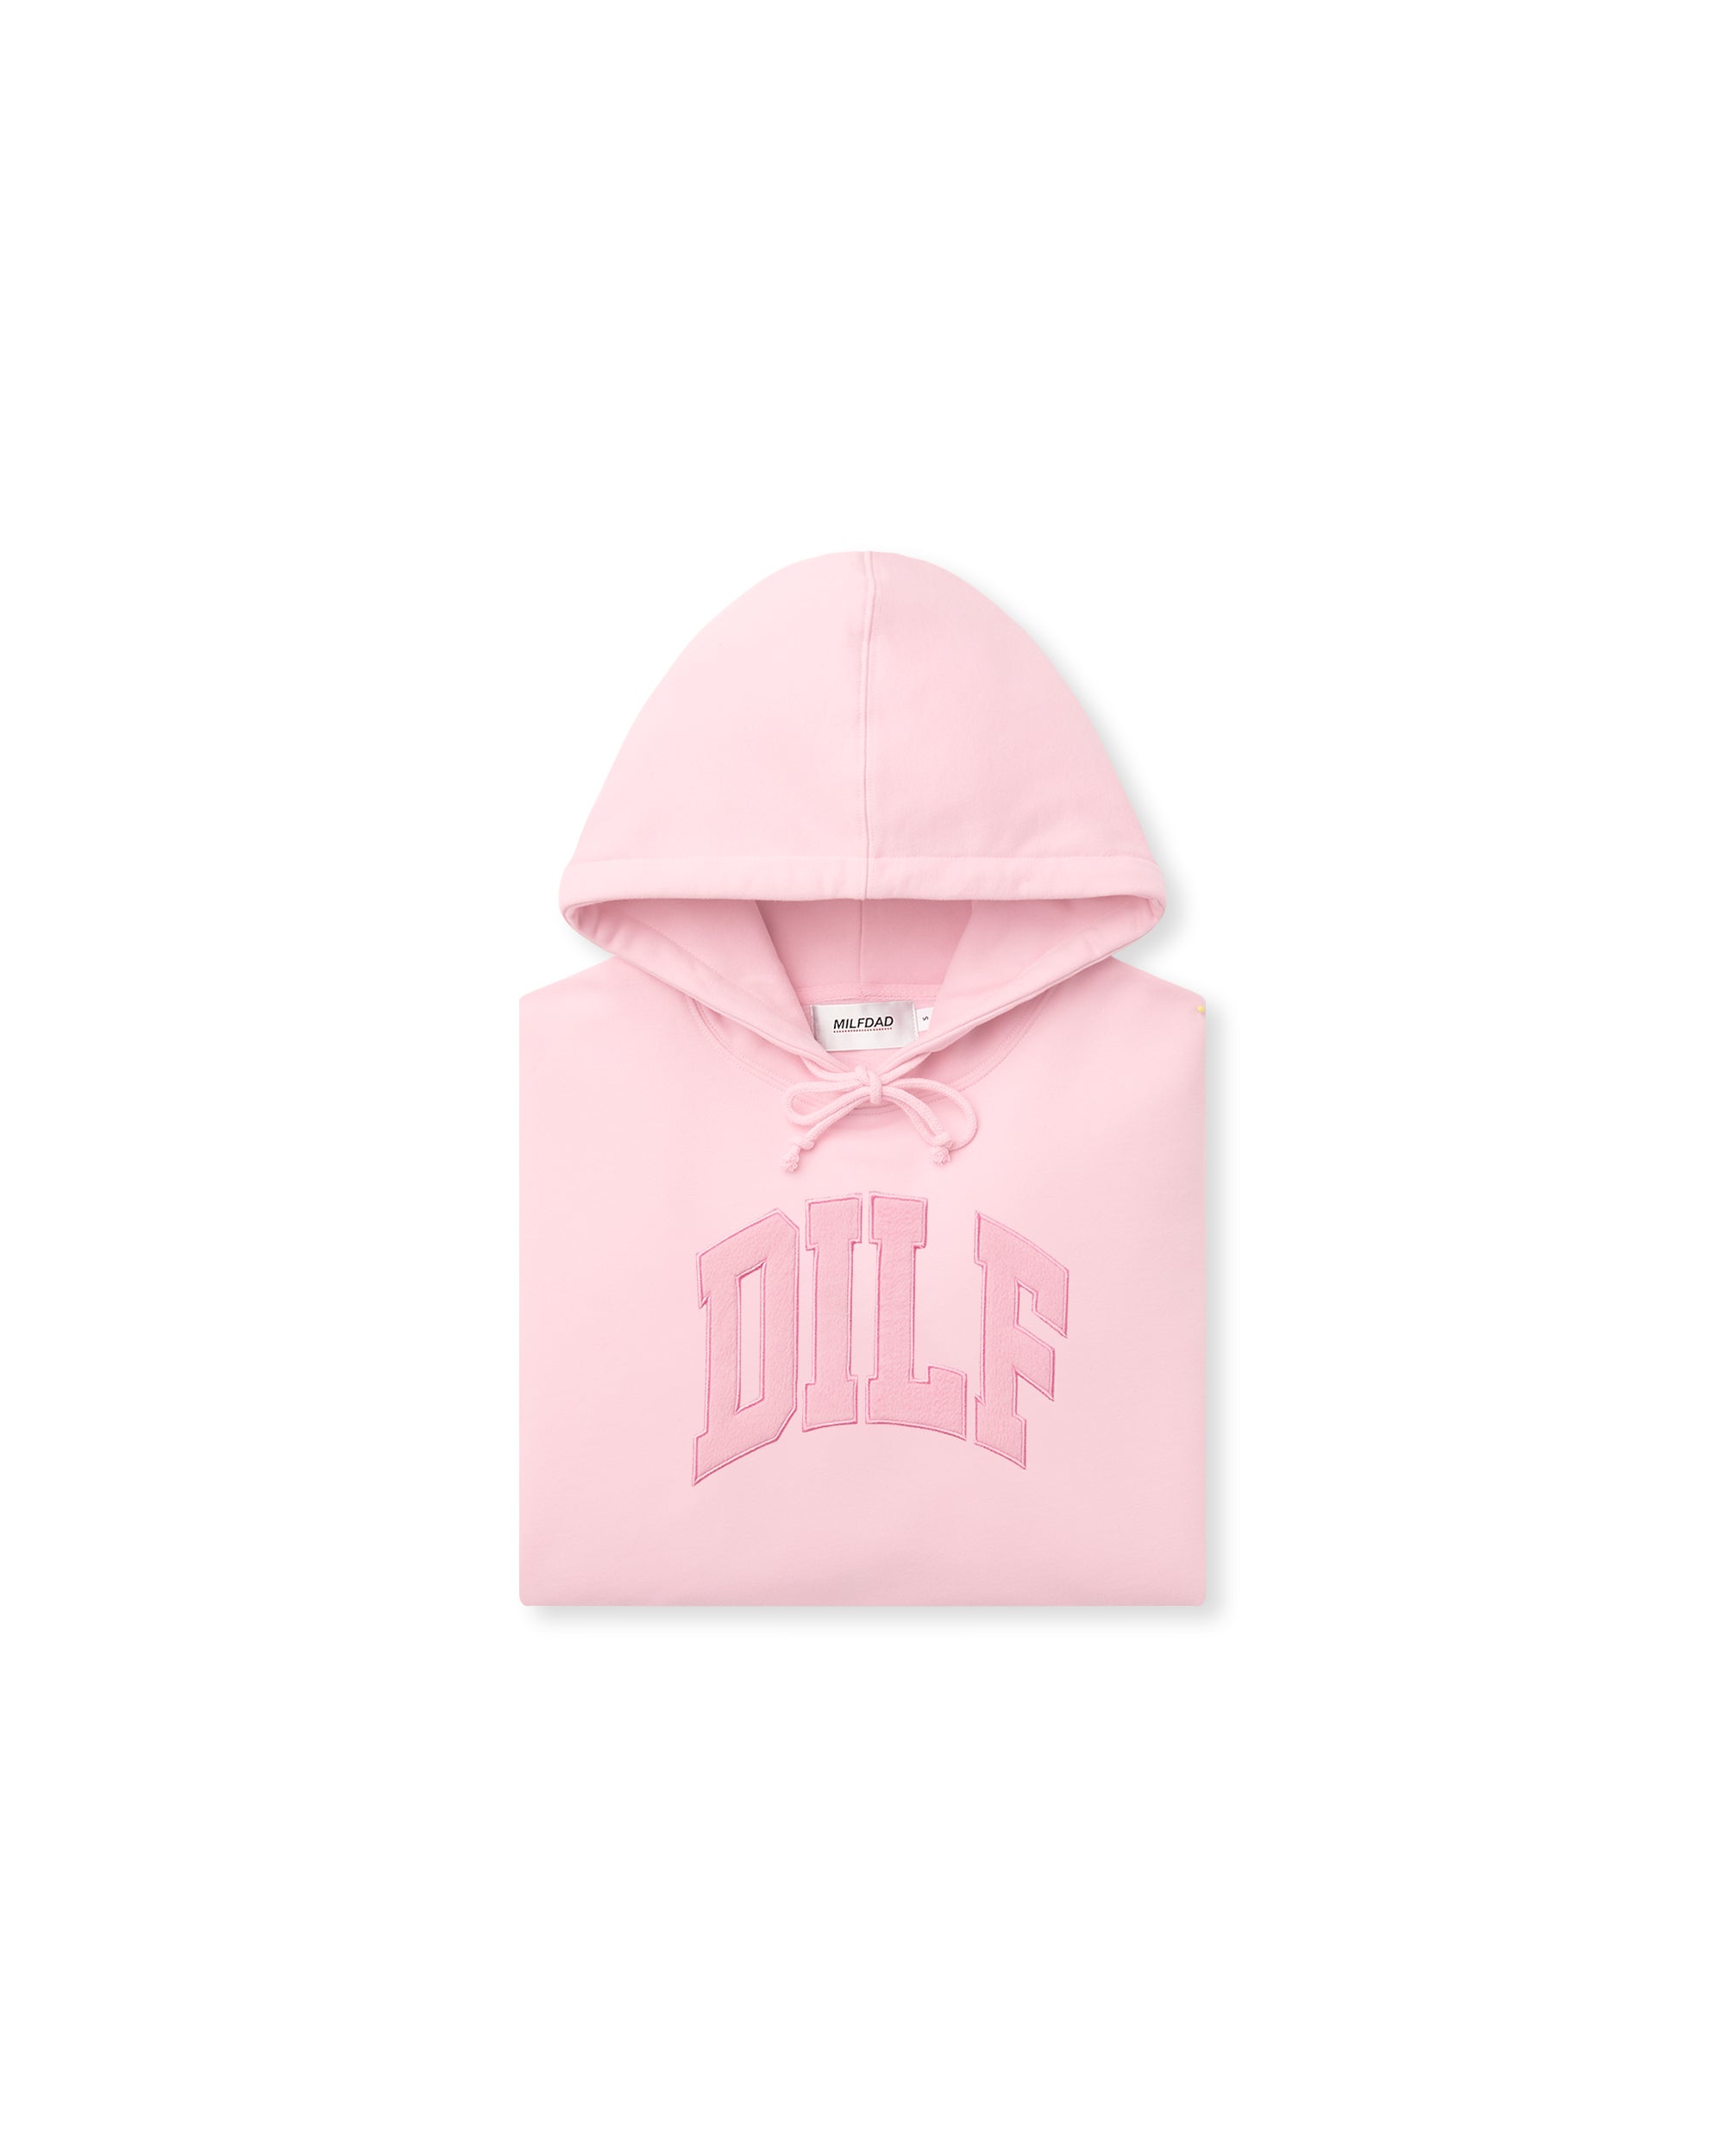 DILF Arc Logo Hoodie - Pink